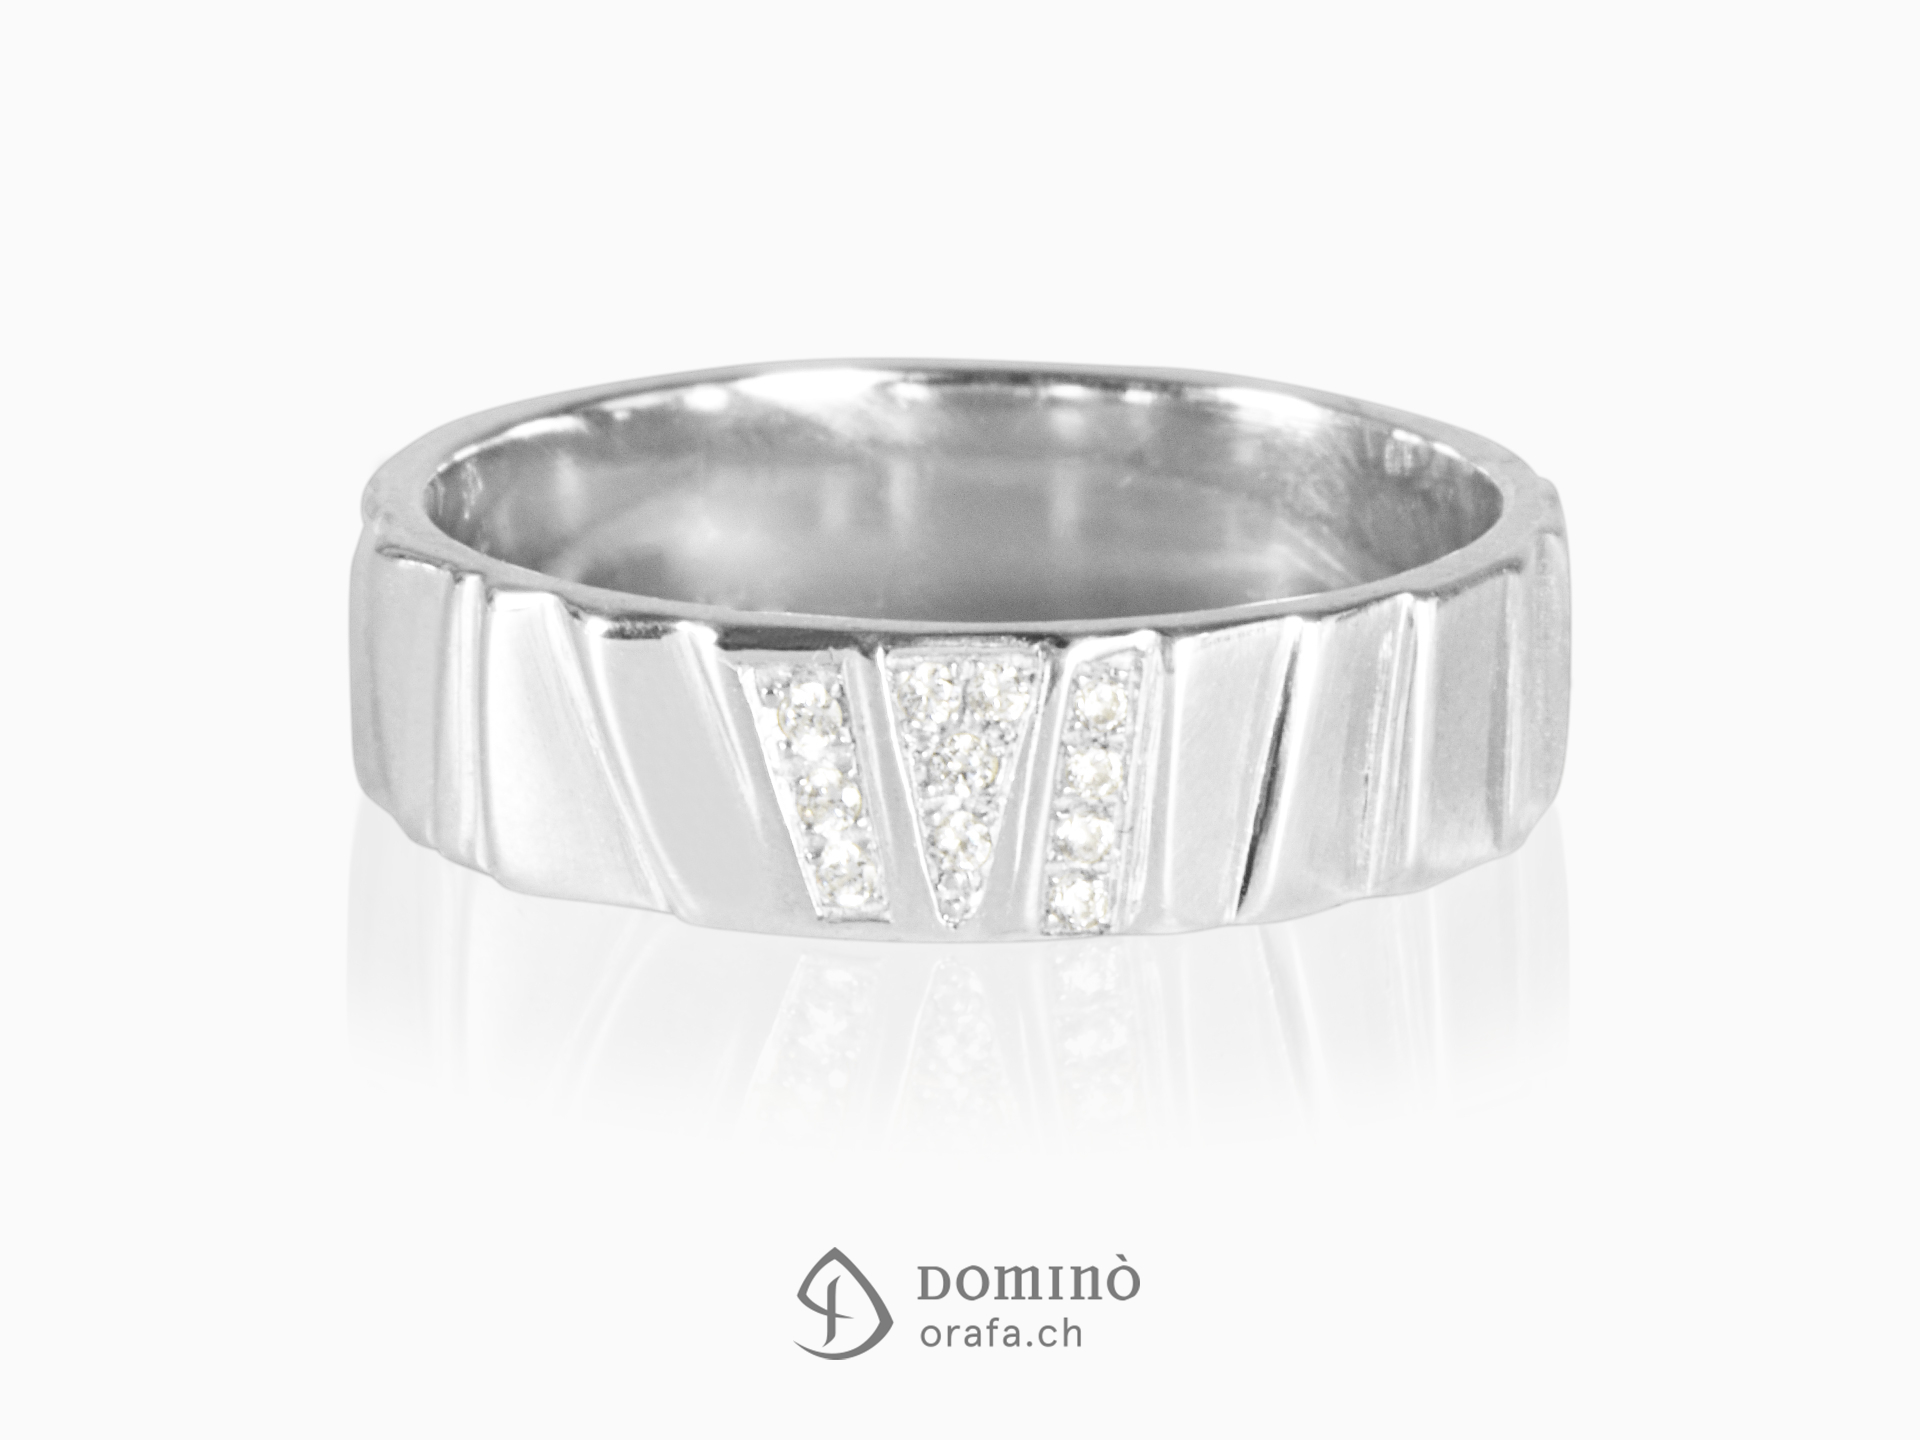 Irregular Scalini ring with diamonds